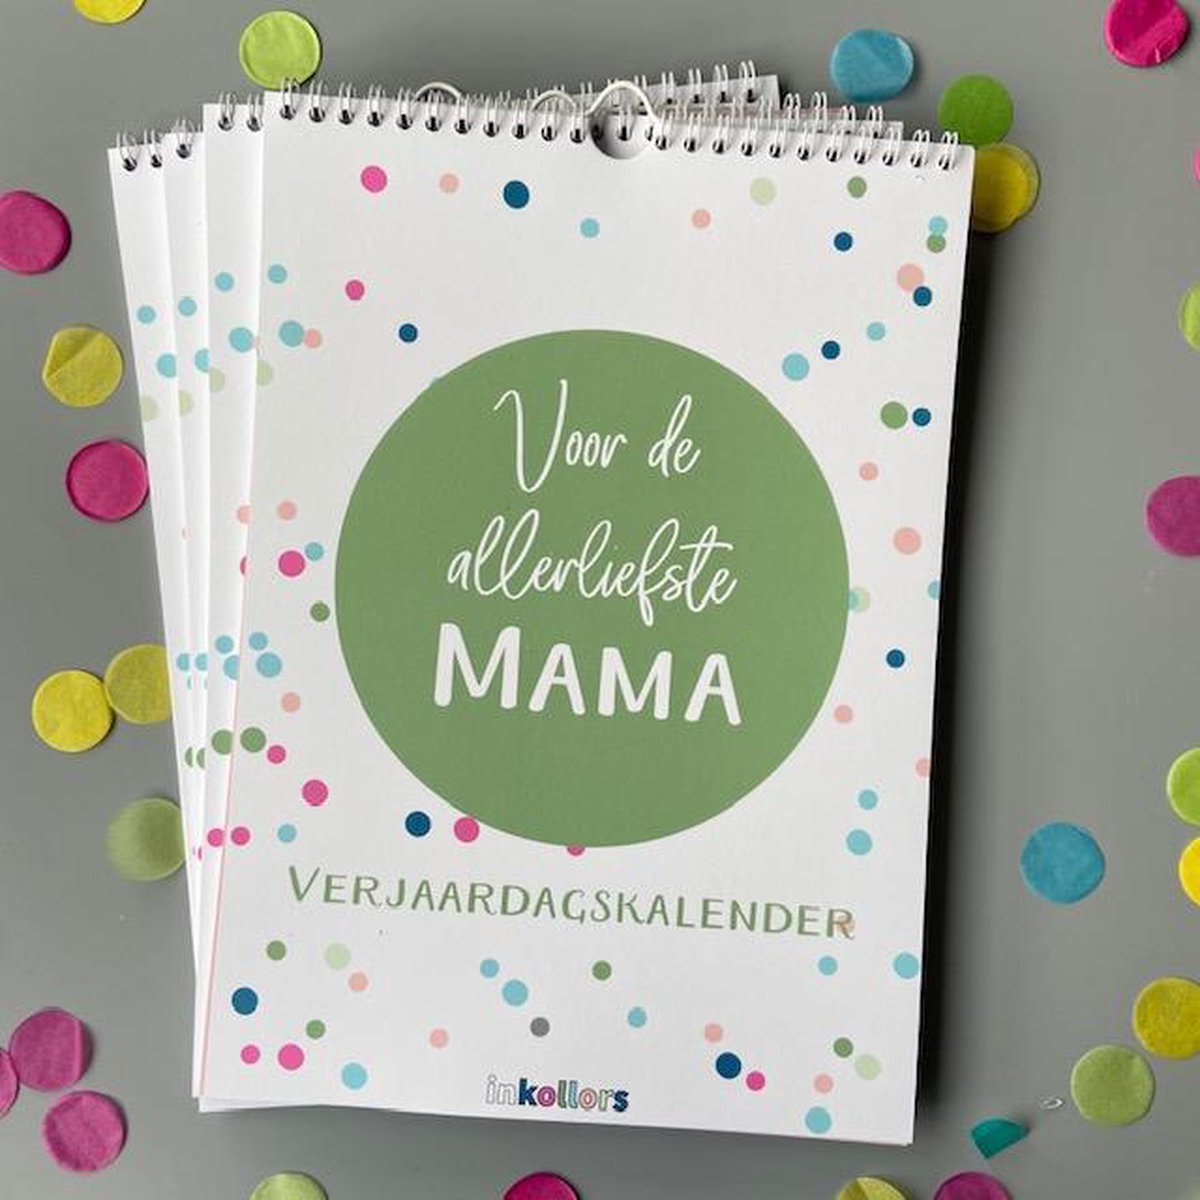 Verjaardagskalender - A4 - confetti - vrolijk - kalender - familiekalender - verjaardag - inkollors - feest -groen - mama - moeder - mamma - cadeau - kado